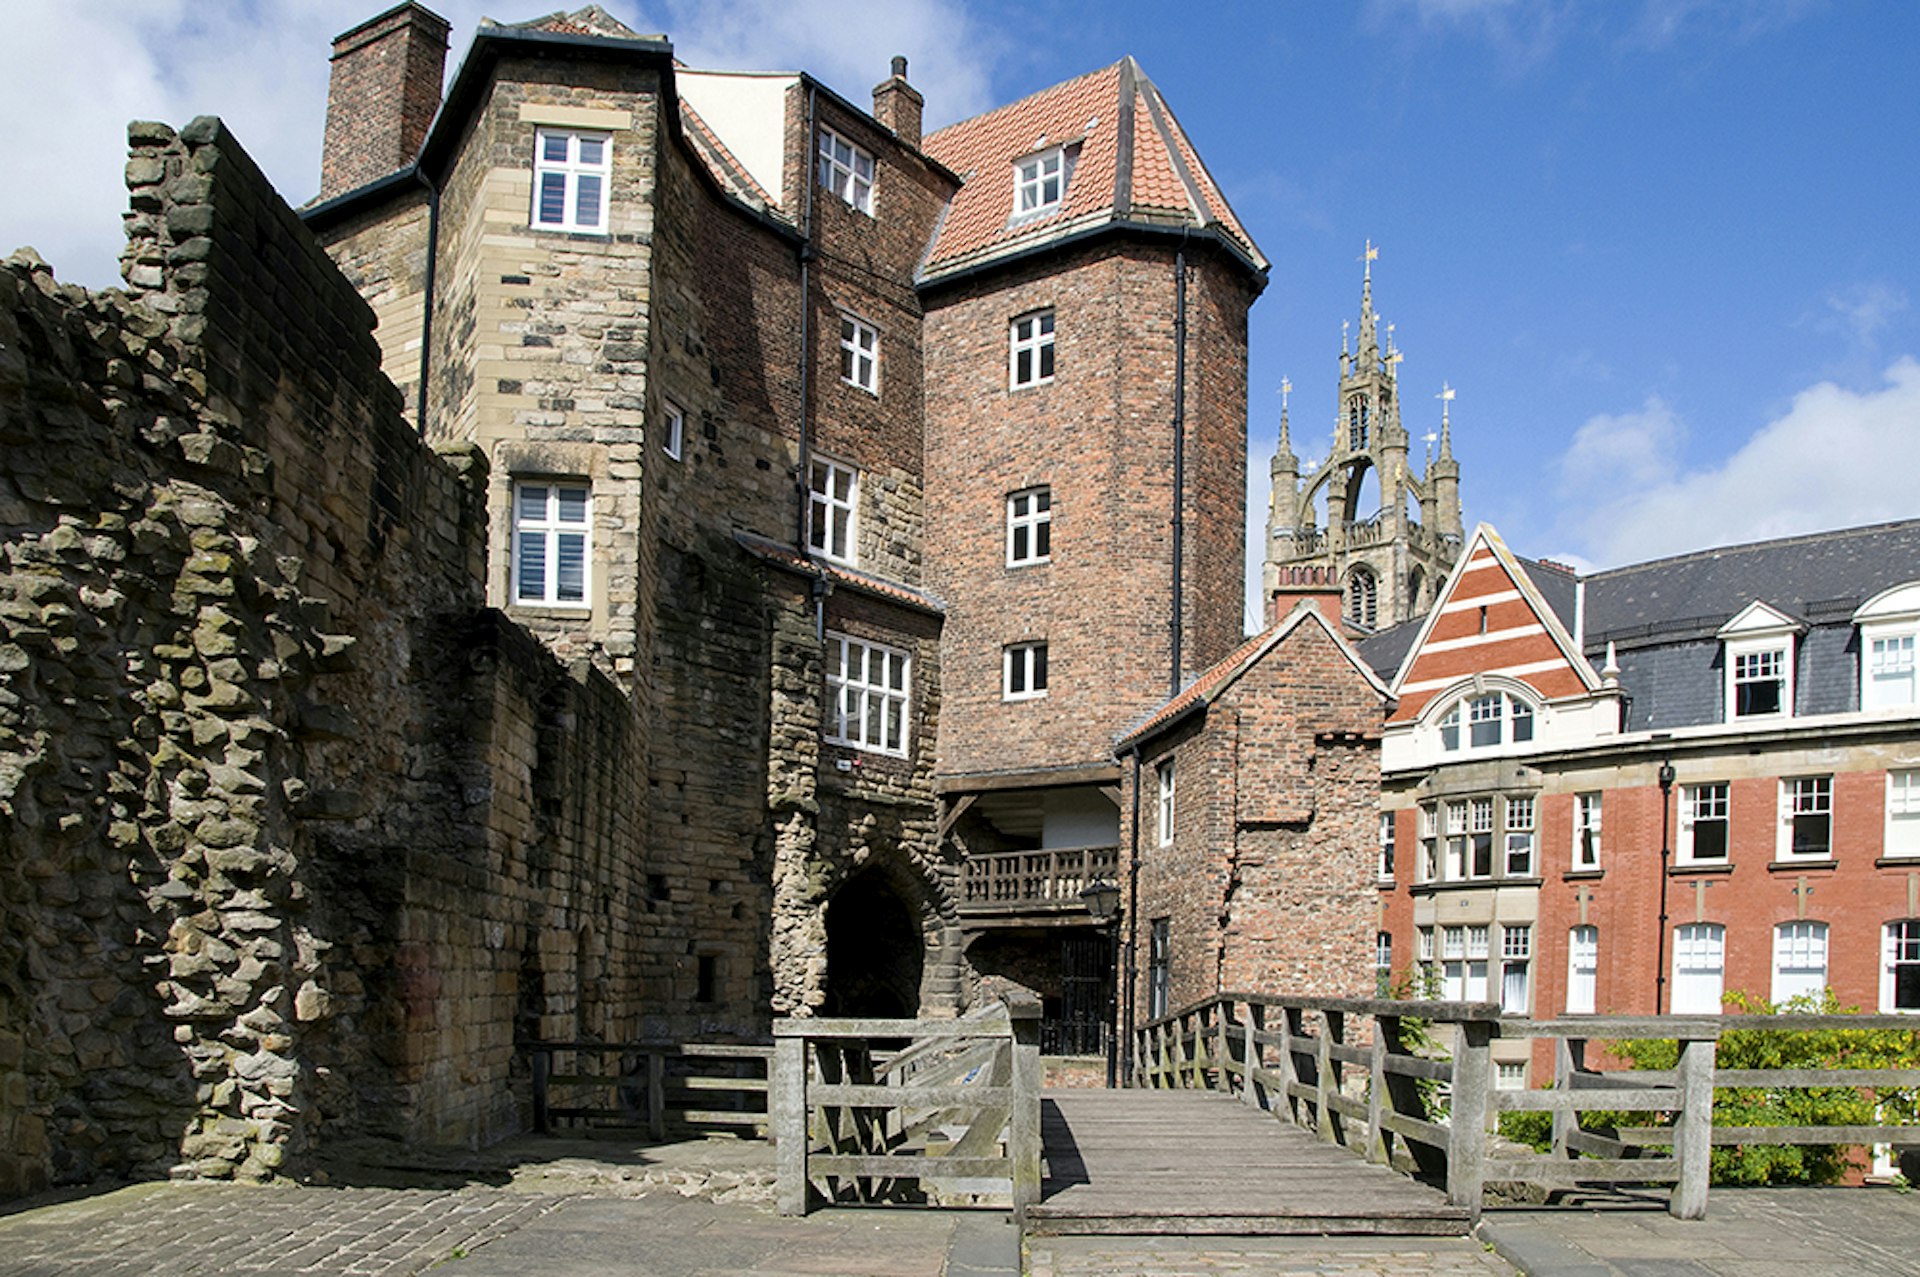 The Black Gate of Castle Garth in the centre of Newcastle